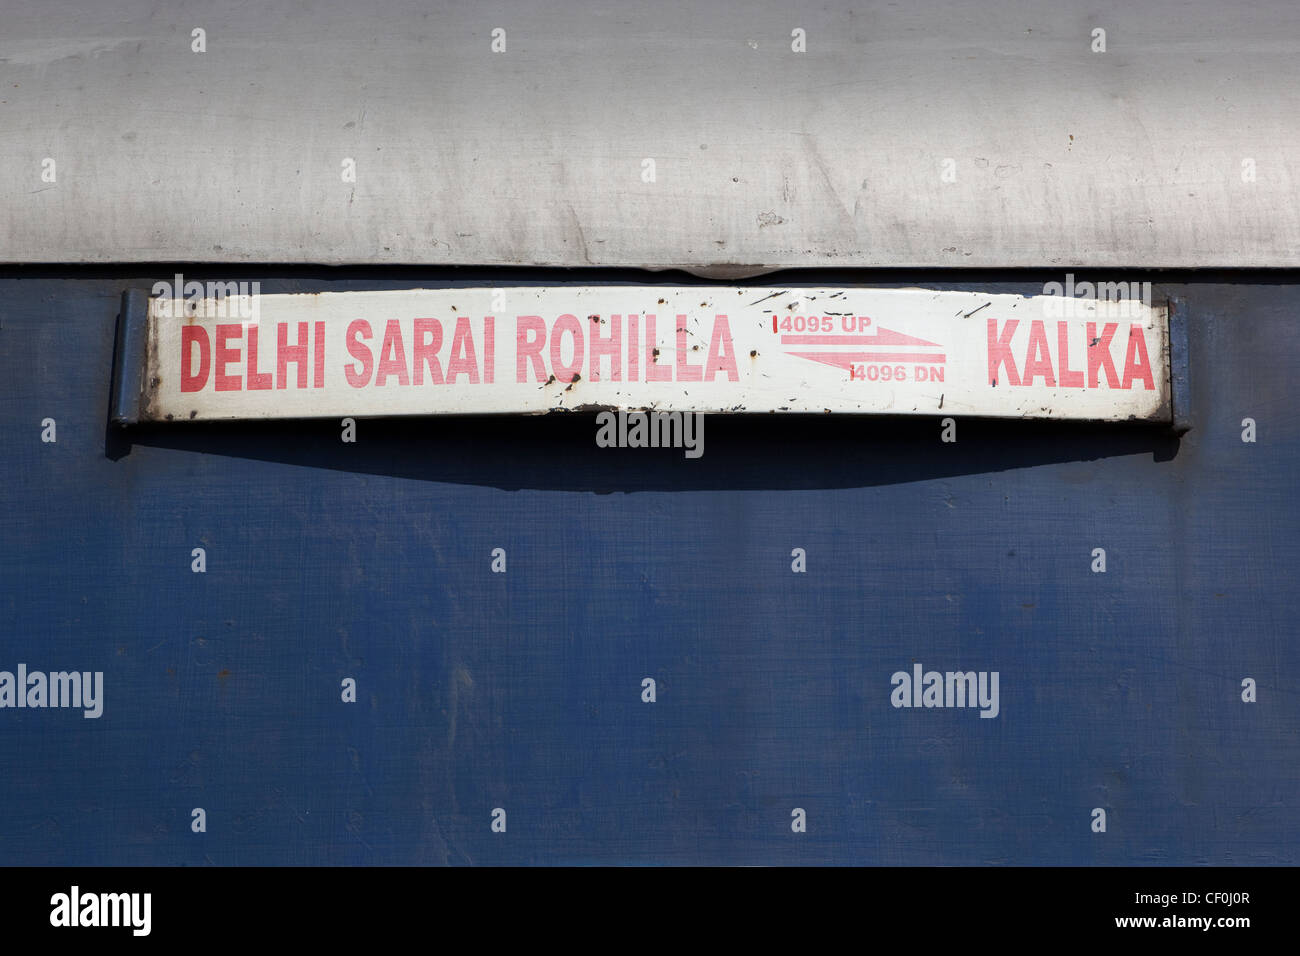 carriage sign on the delhi to kalka train on indian railways Stock Photo